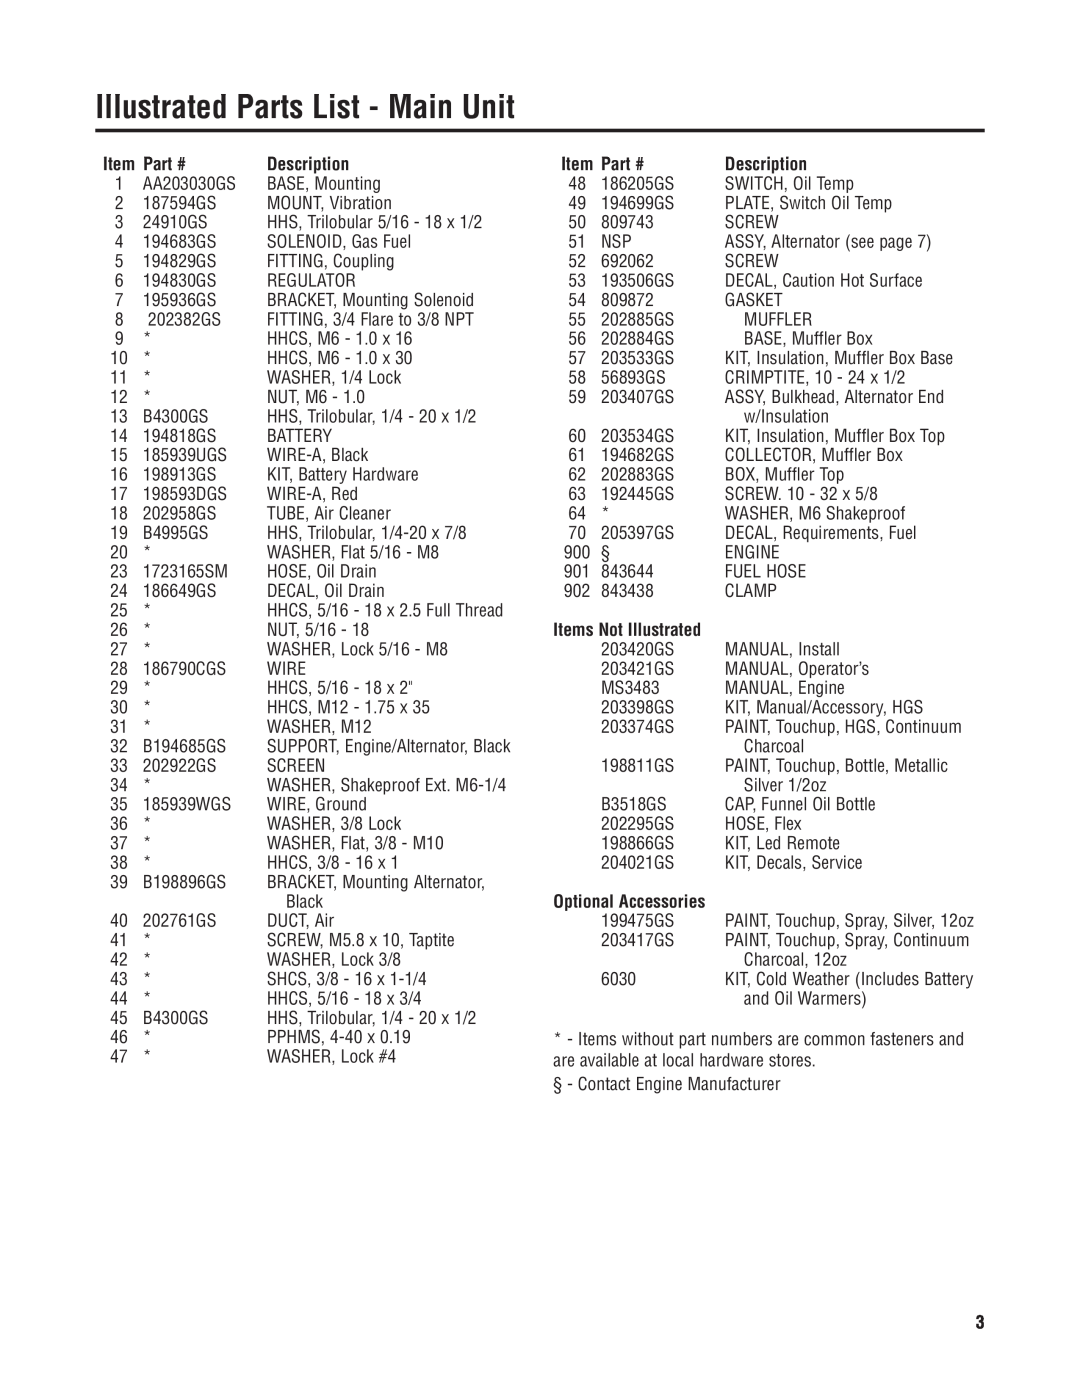 Briggs & Stratton 40276 manual Illustrated Parts List - Main Unit, Description, Items Not Illustrated 